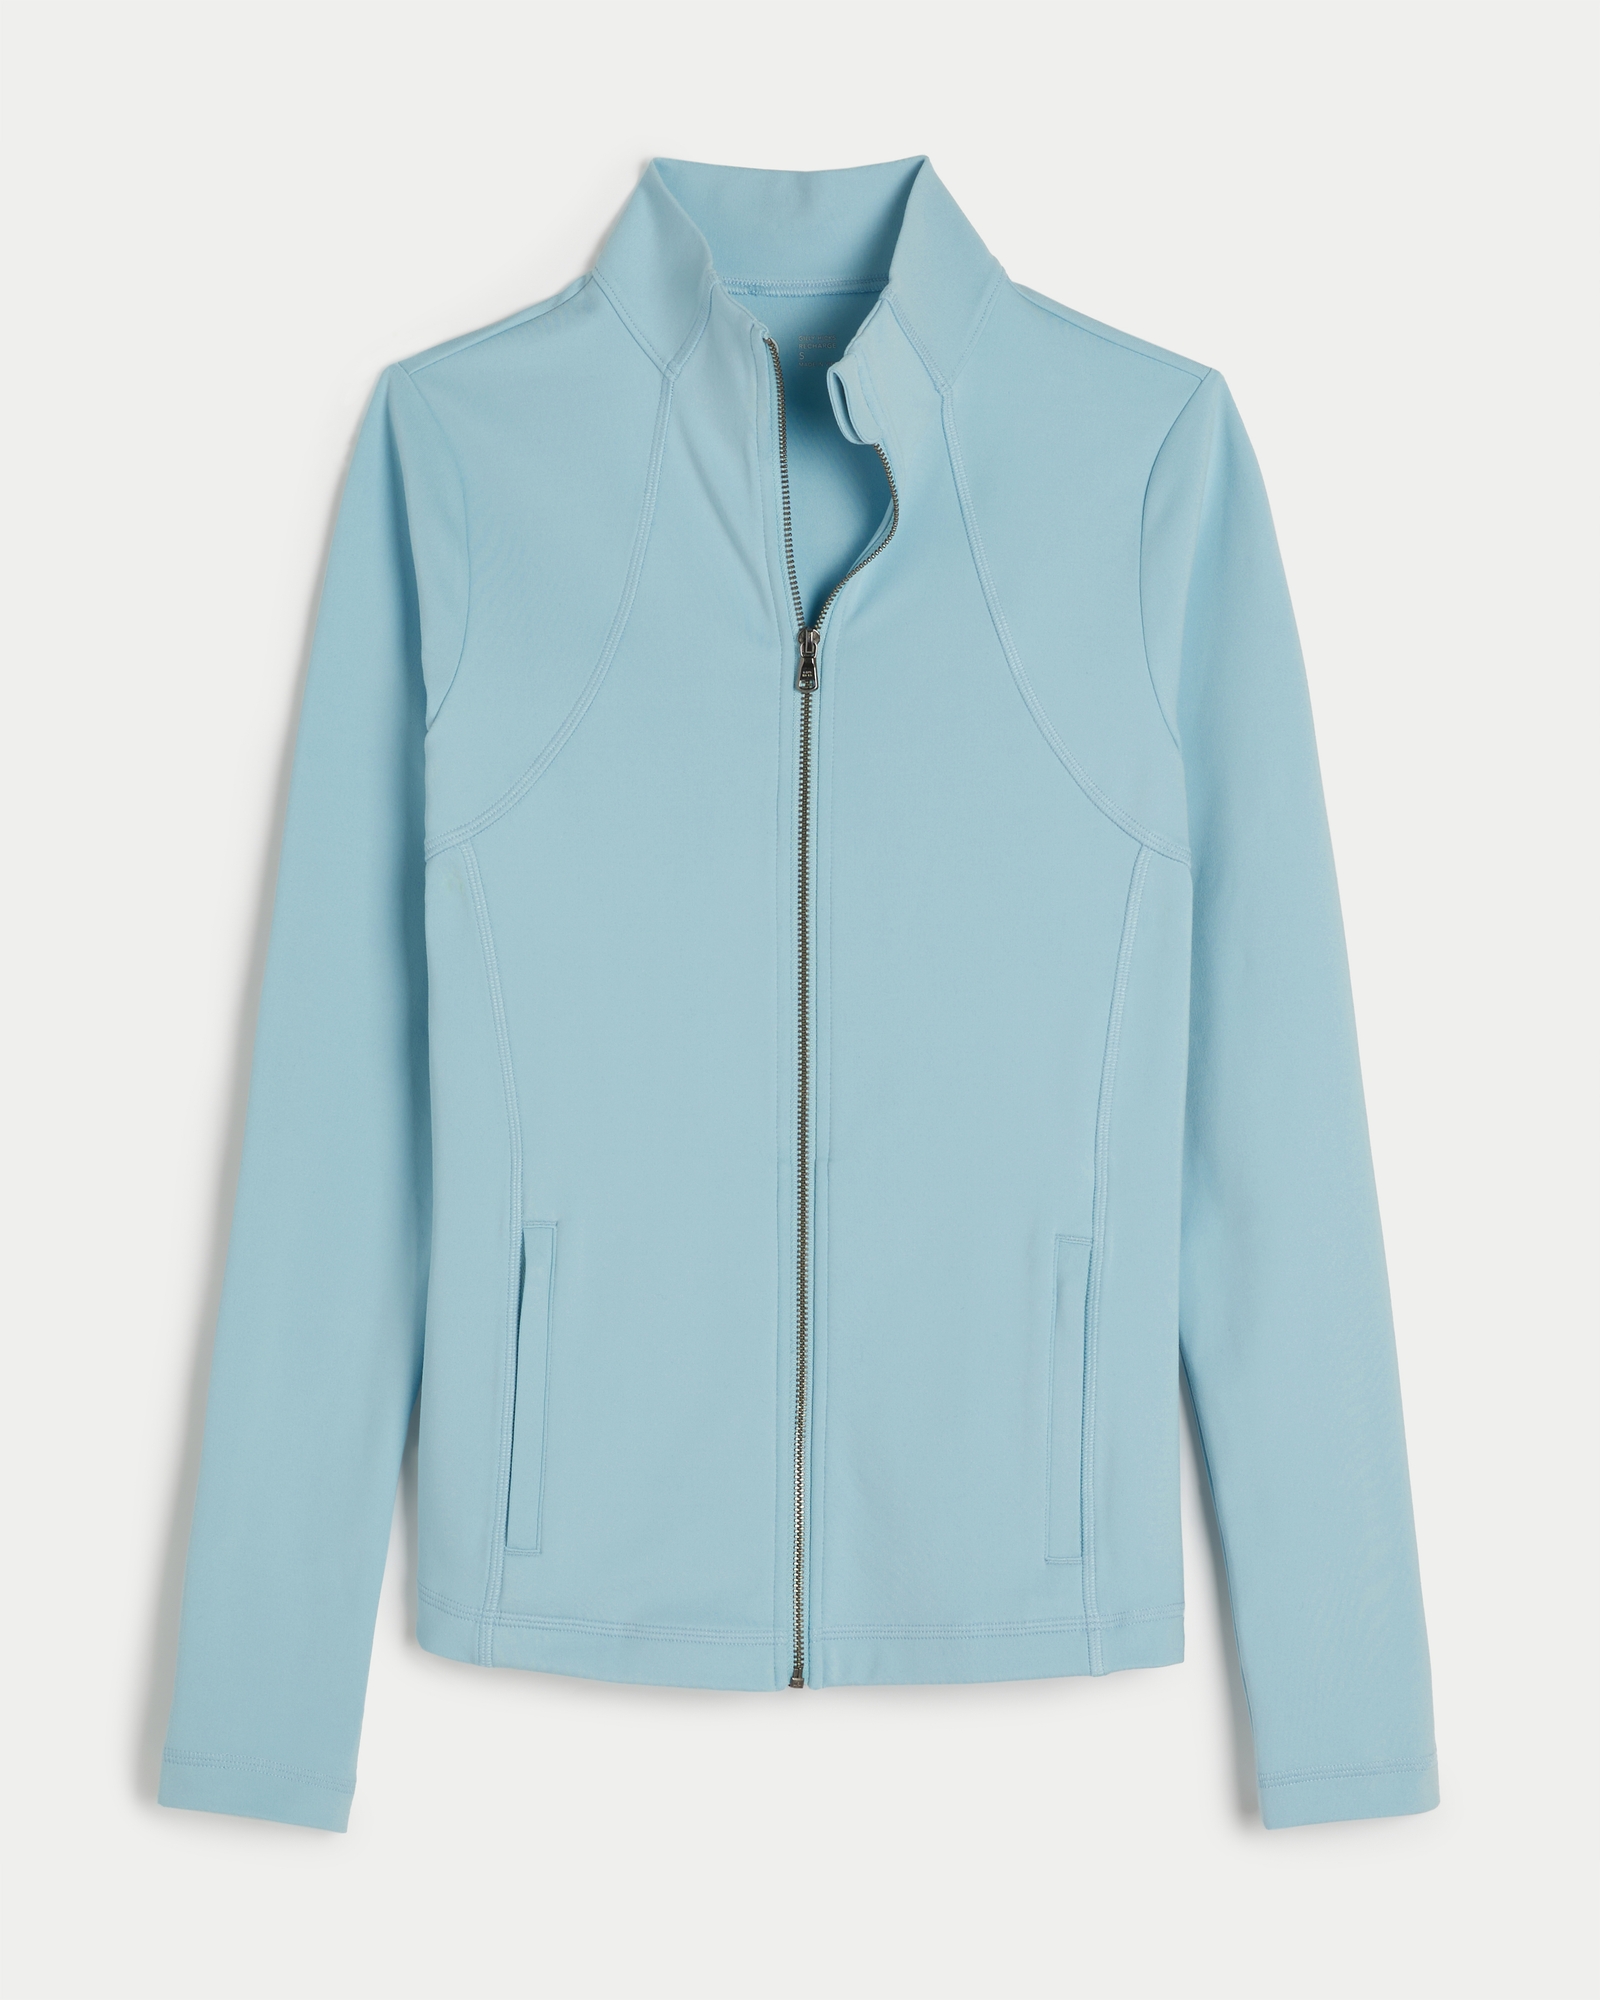 Hollister Co. Faux Fur Zip-Up Sweatshirt Blue Size M - $60 (60% Off Retail)  - From Nicole